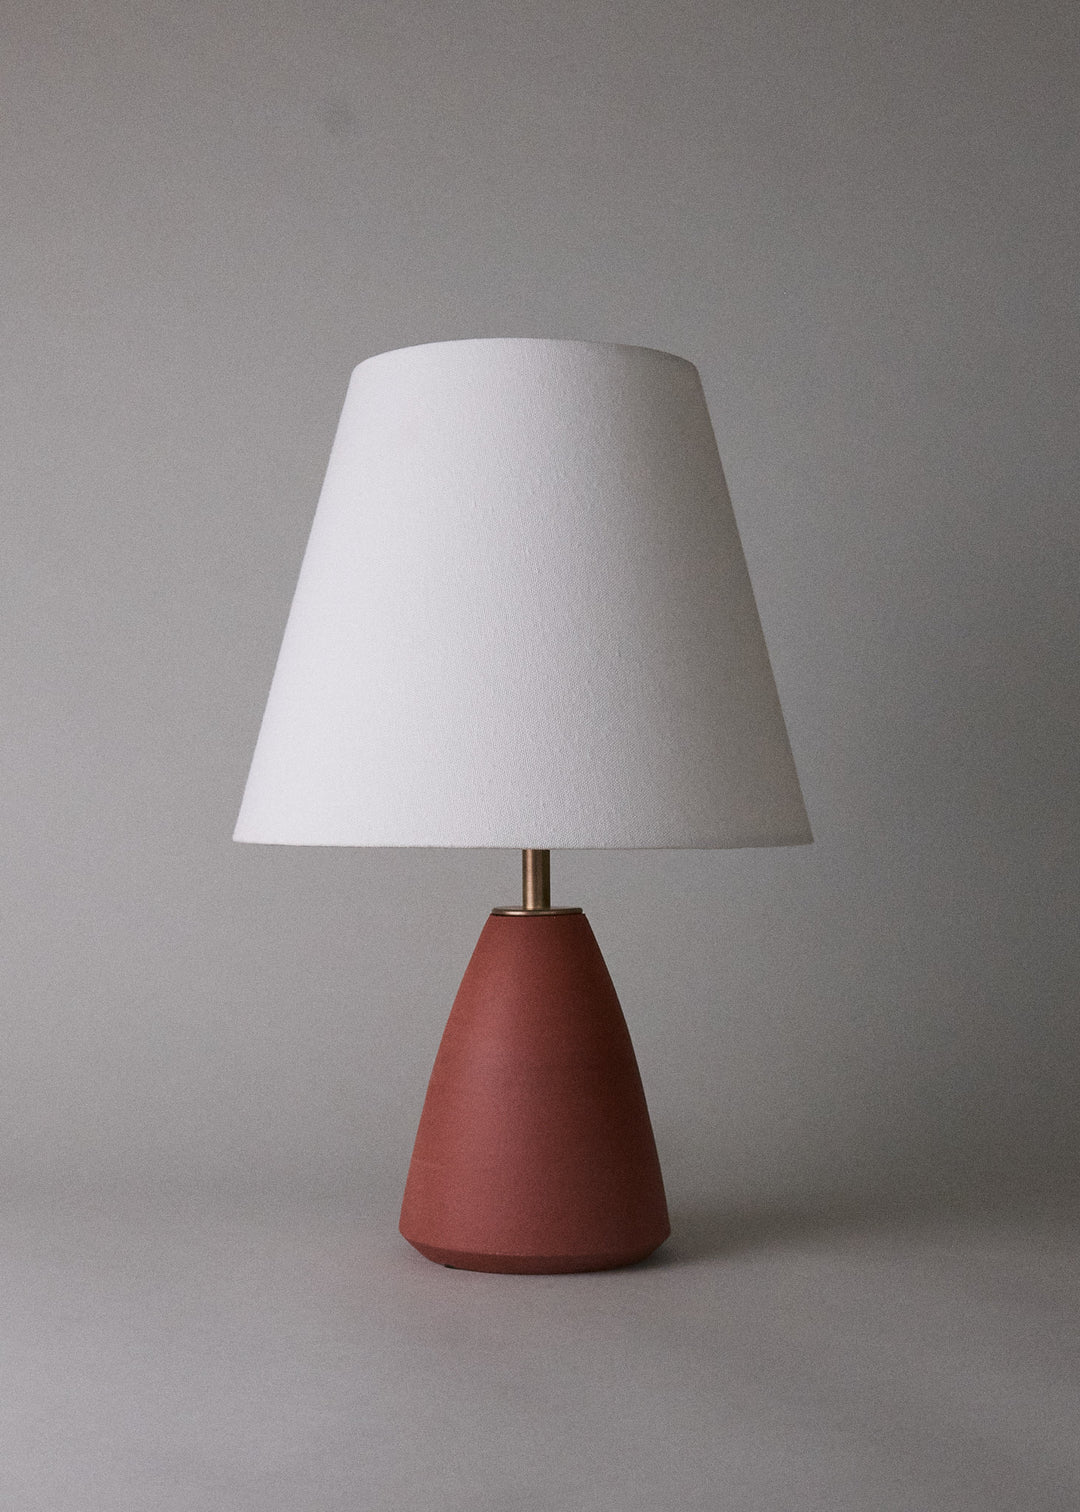 Small Angle Lamp in Brick - Victoria Morris Pottery